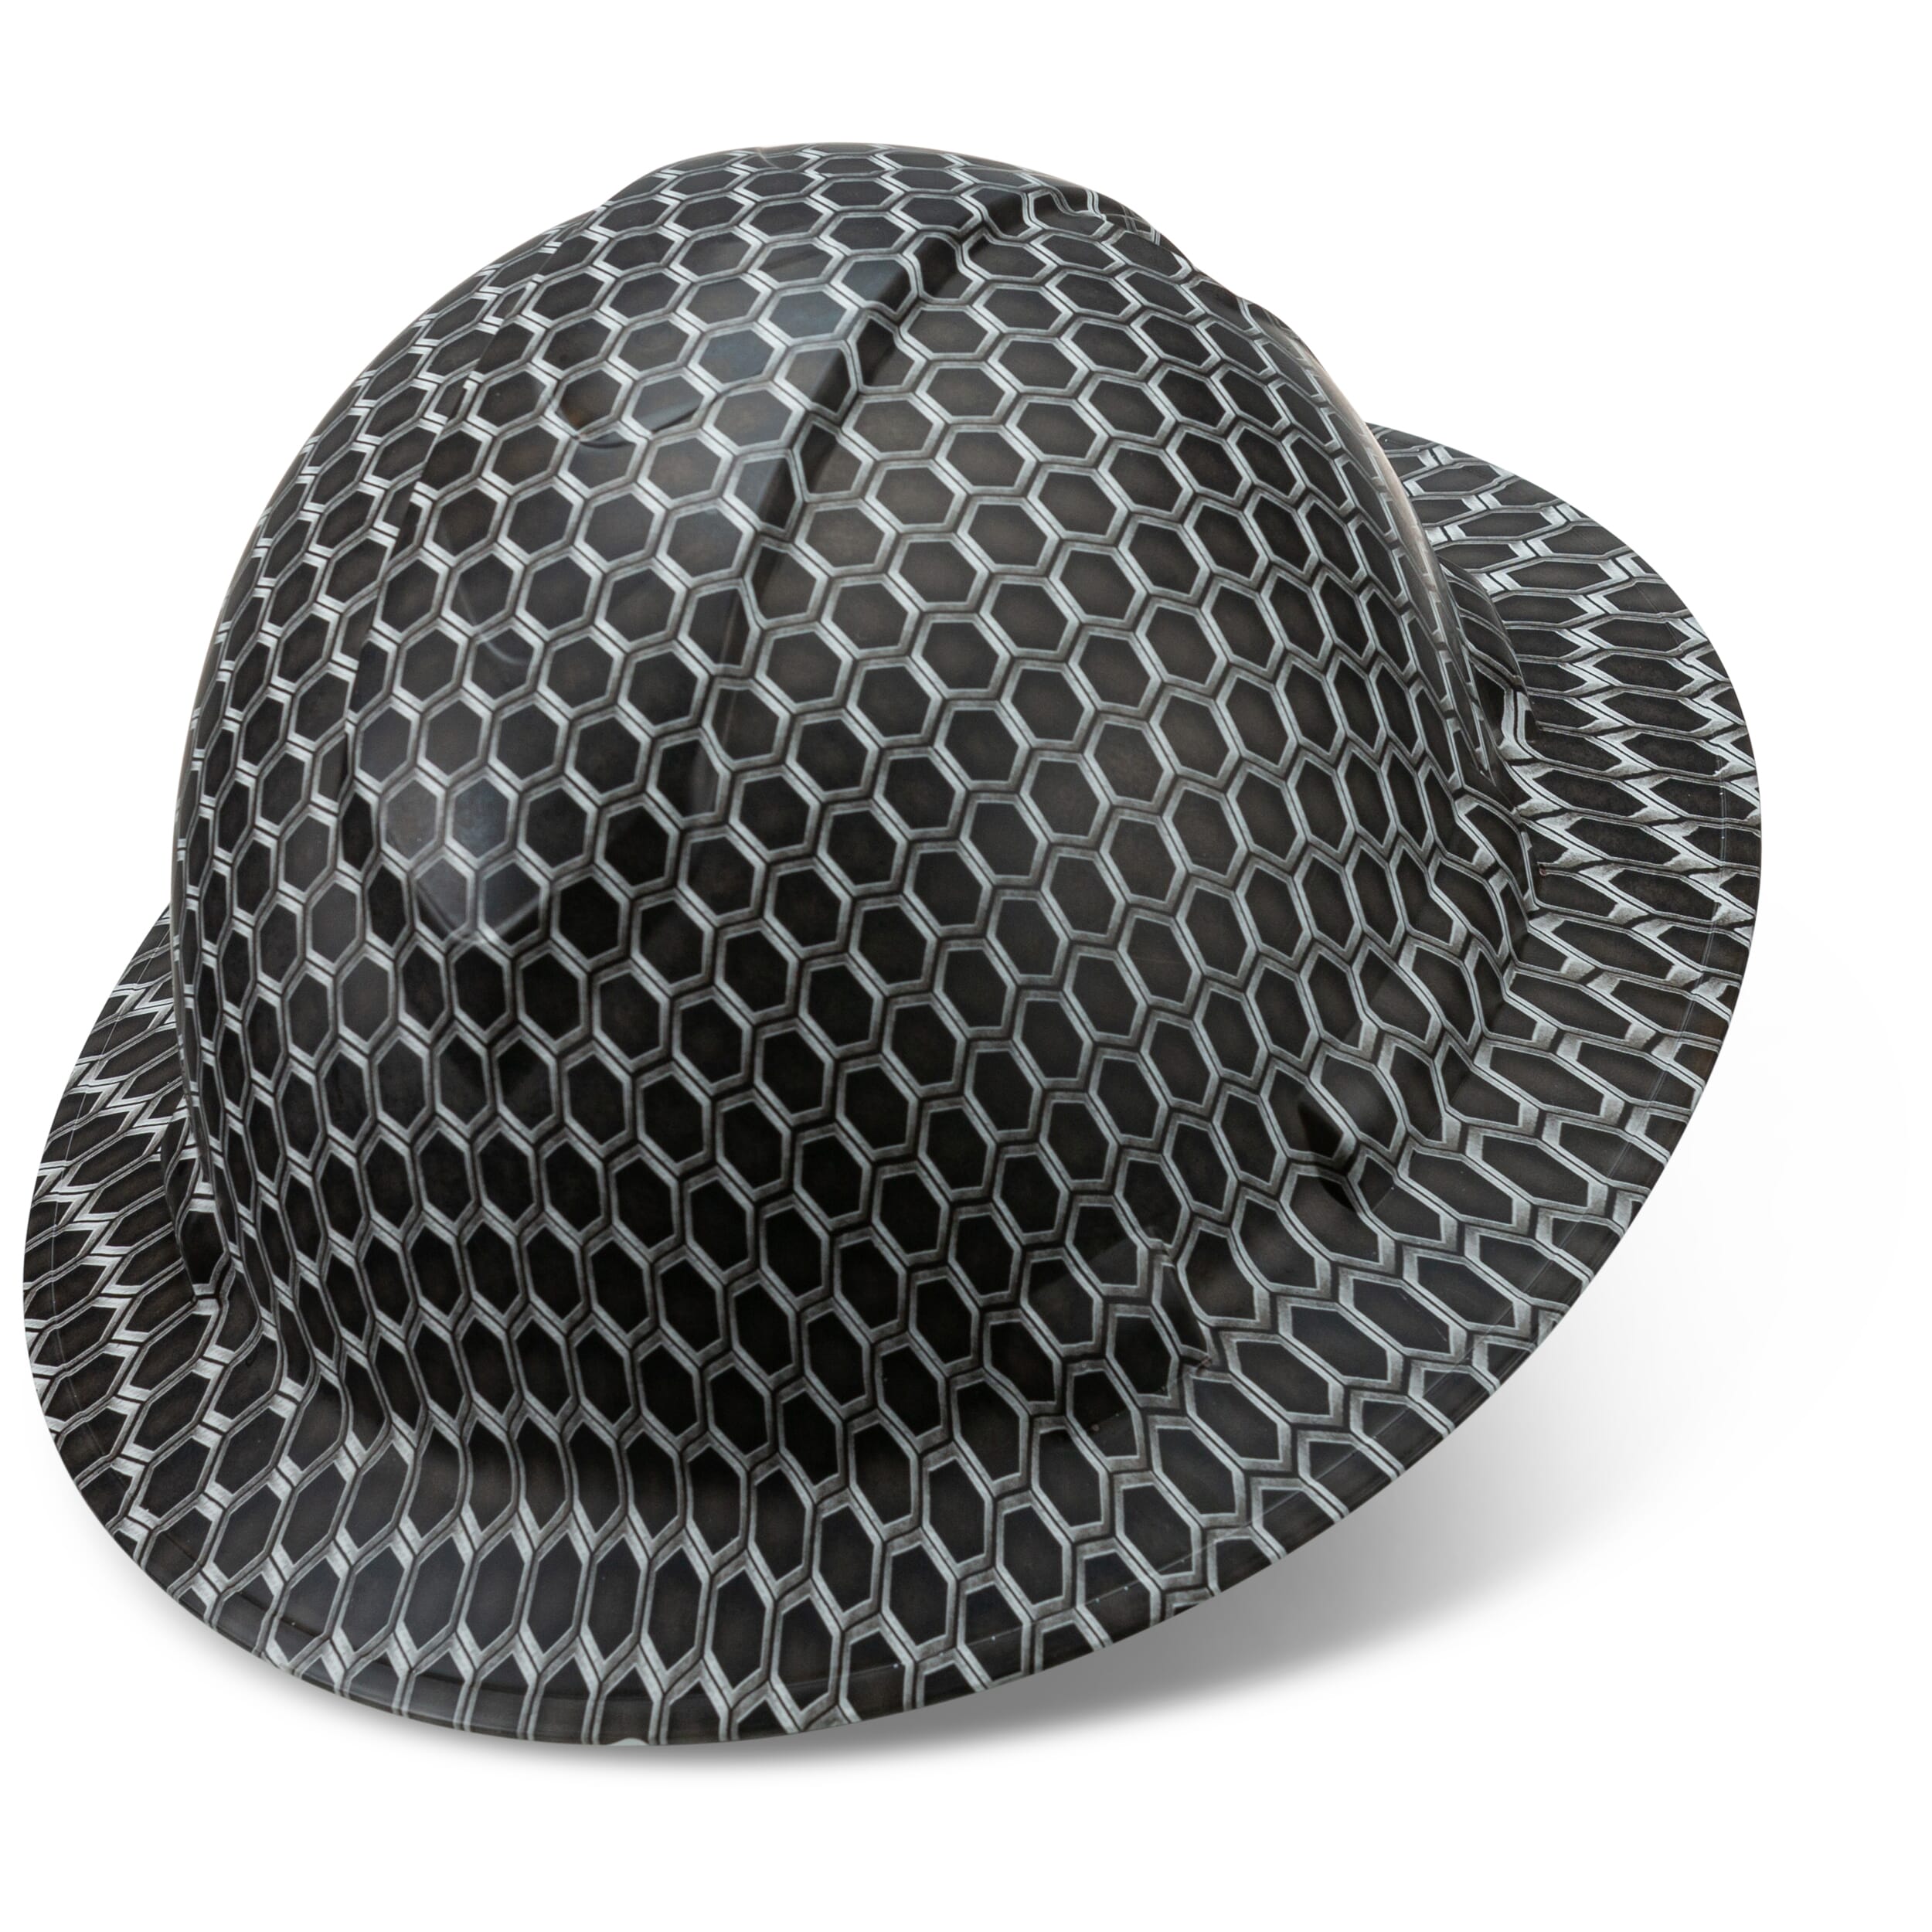 Full Brim Pyramex Hard Hat, Custom Black Beehive Design, Safety Helmet, 6 Point